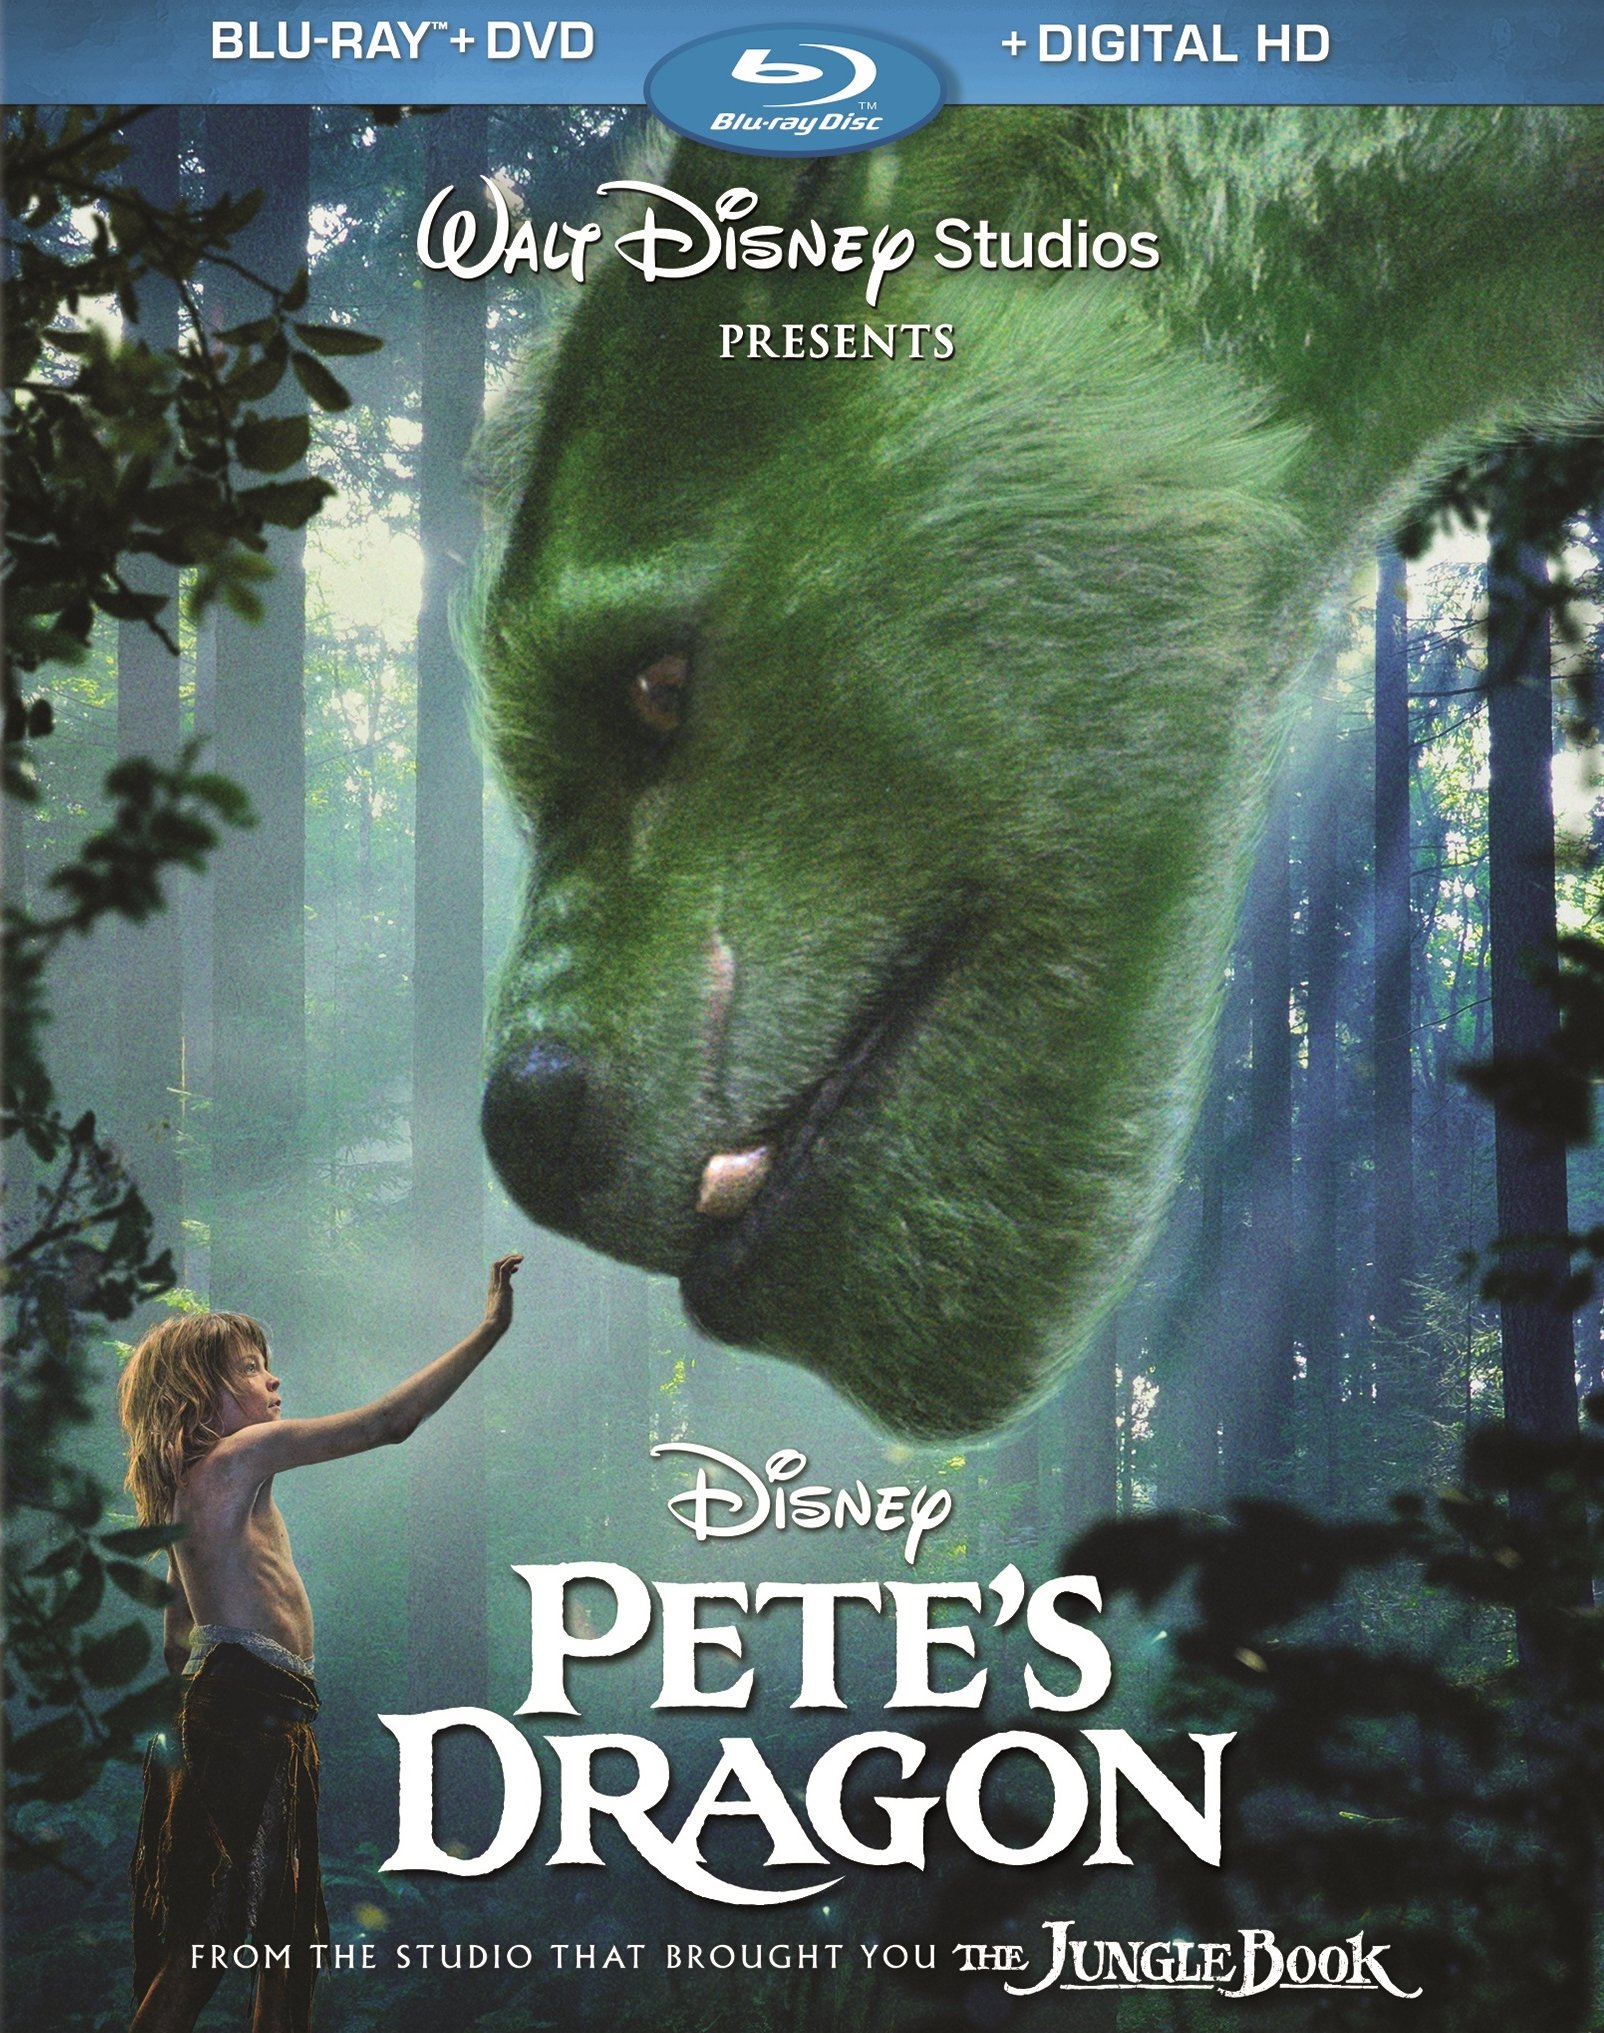 Pete's Dragon [Includes Digita
l Copy] [Blu-ray/DVD] [2016] - Best Buy